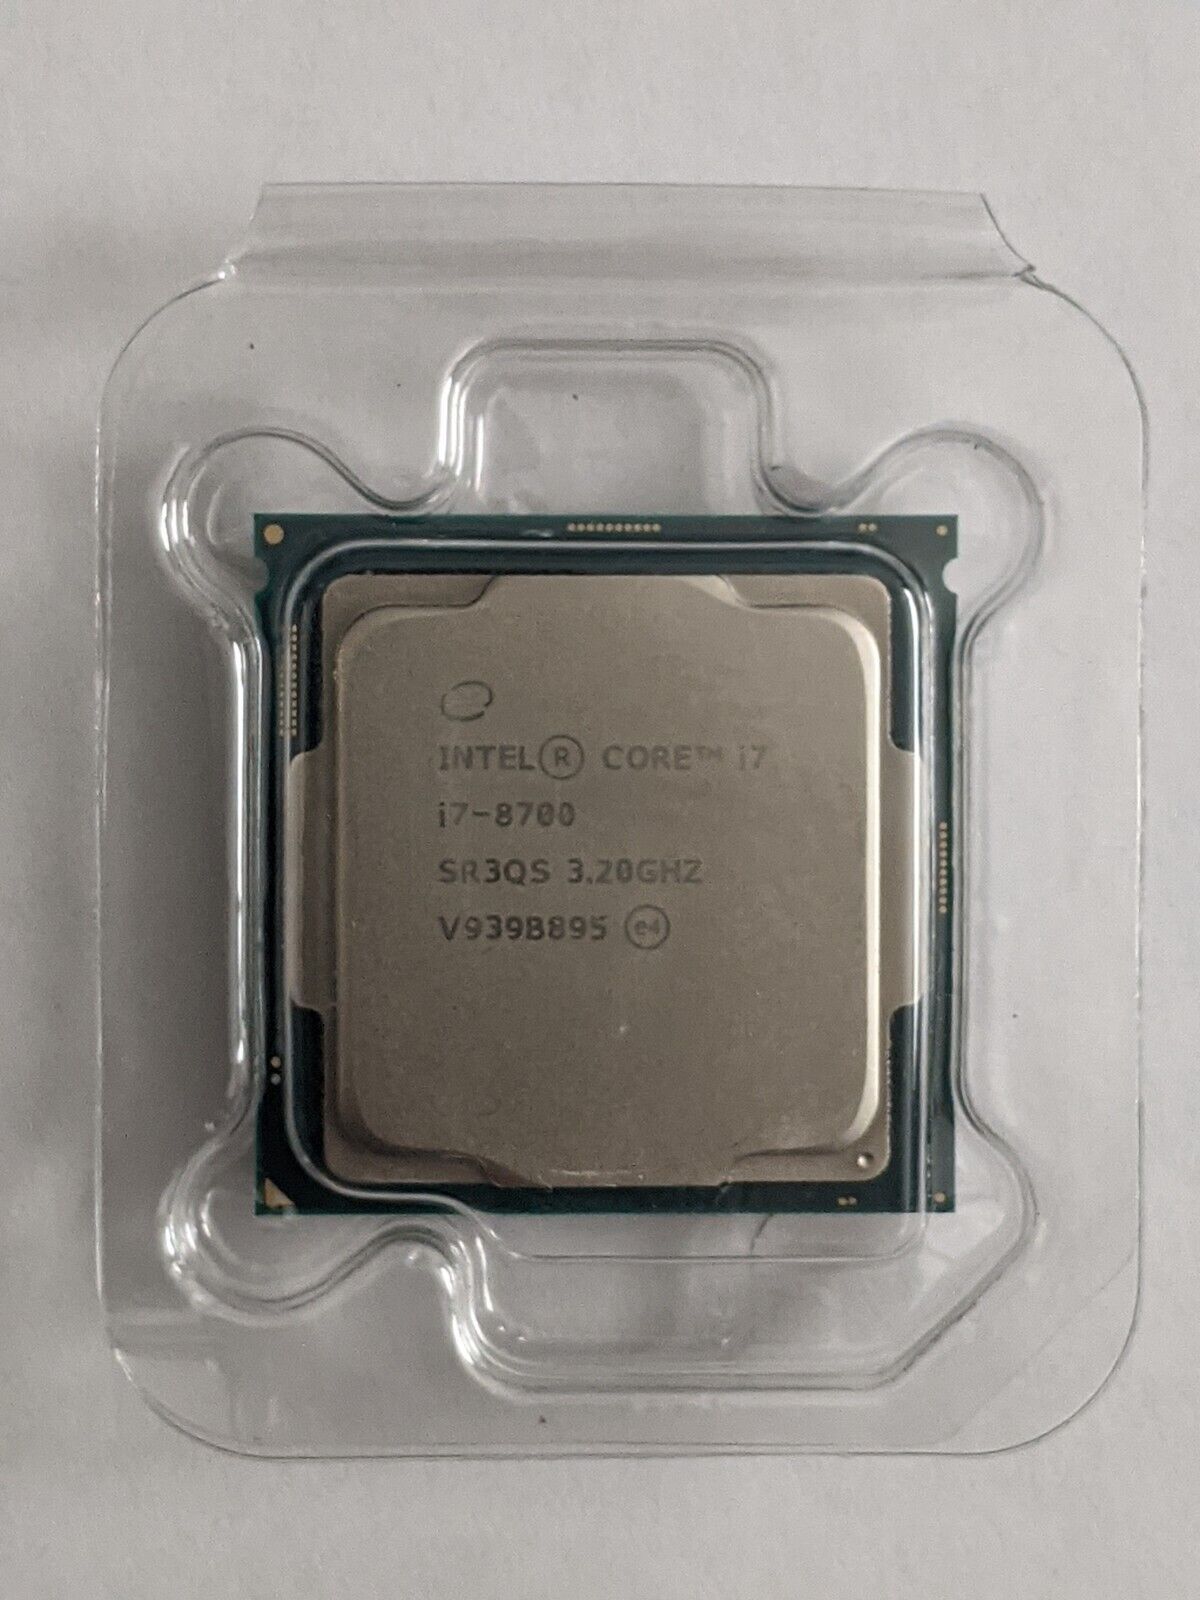 Ships Today ✅ Intel Core i7-8700 CPU Processor 3.2 GHz 6 Core LGA 1151 SR3QS